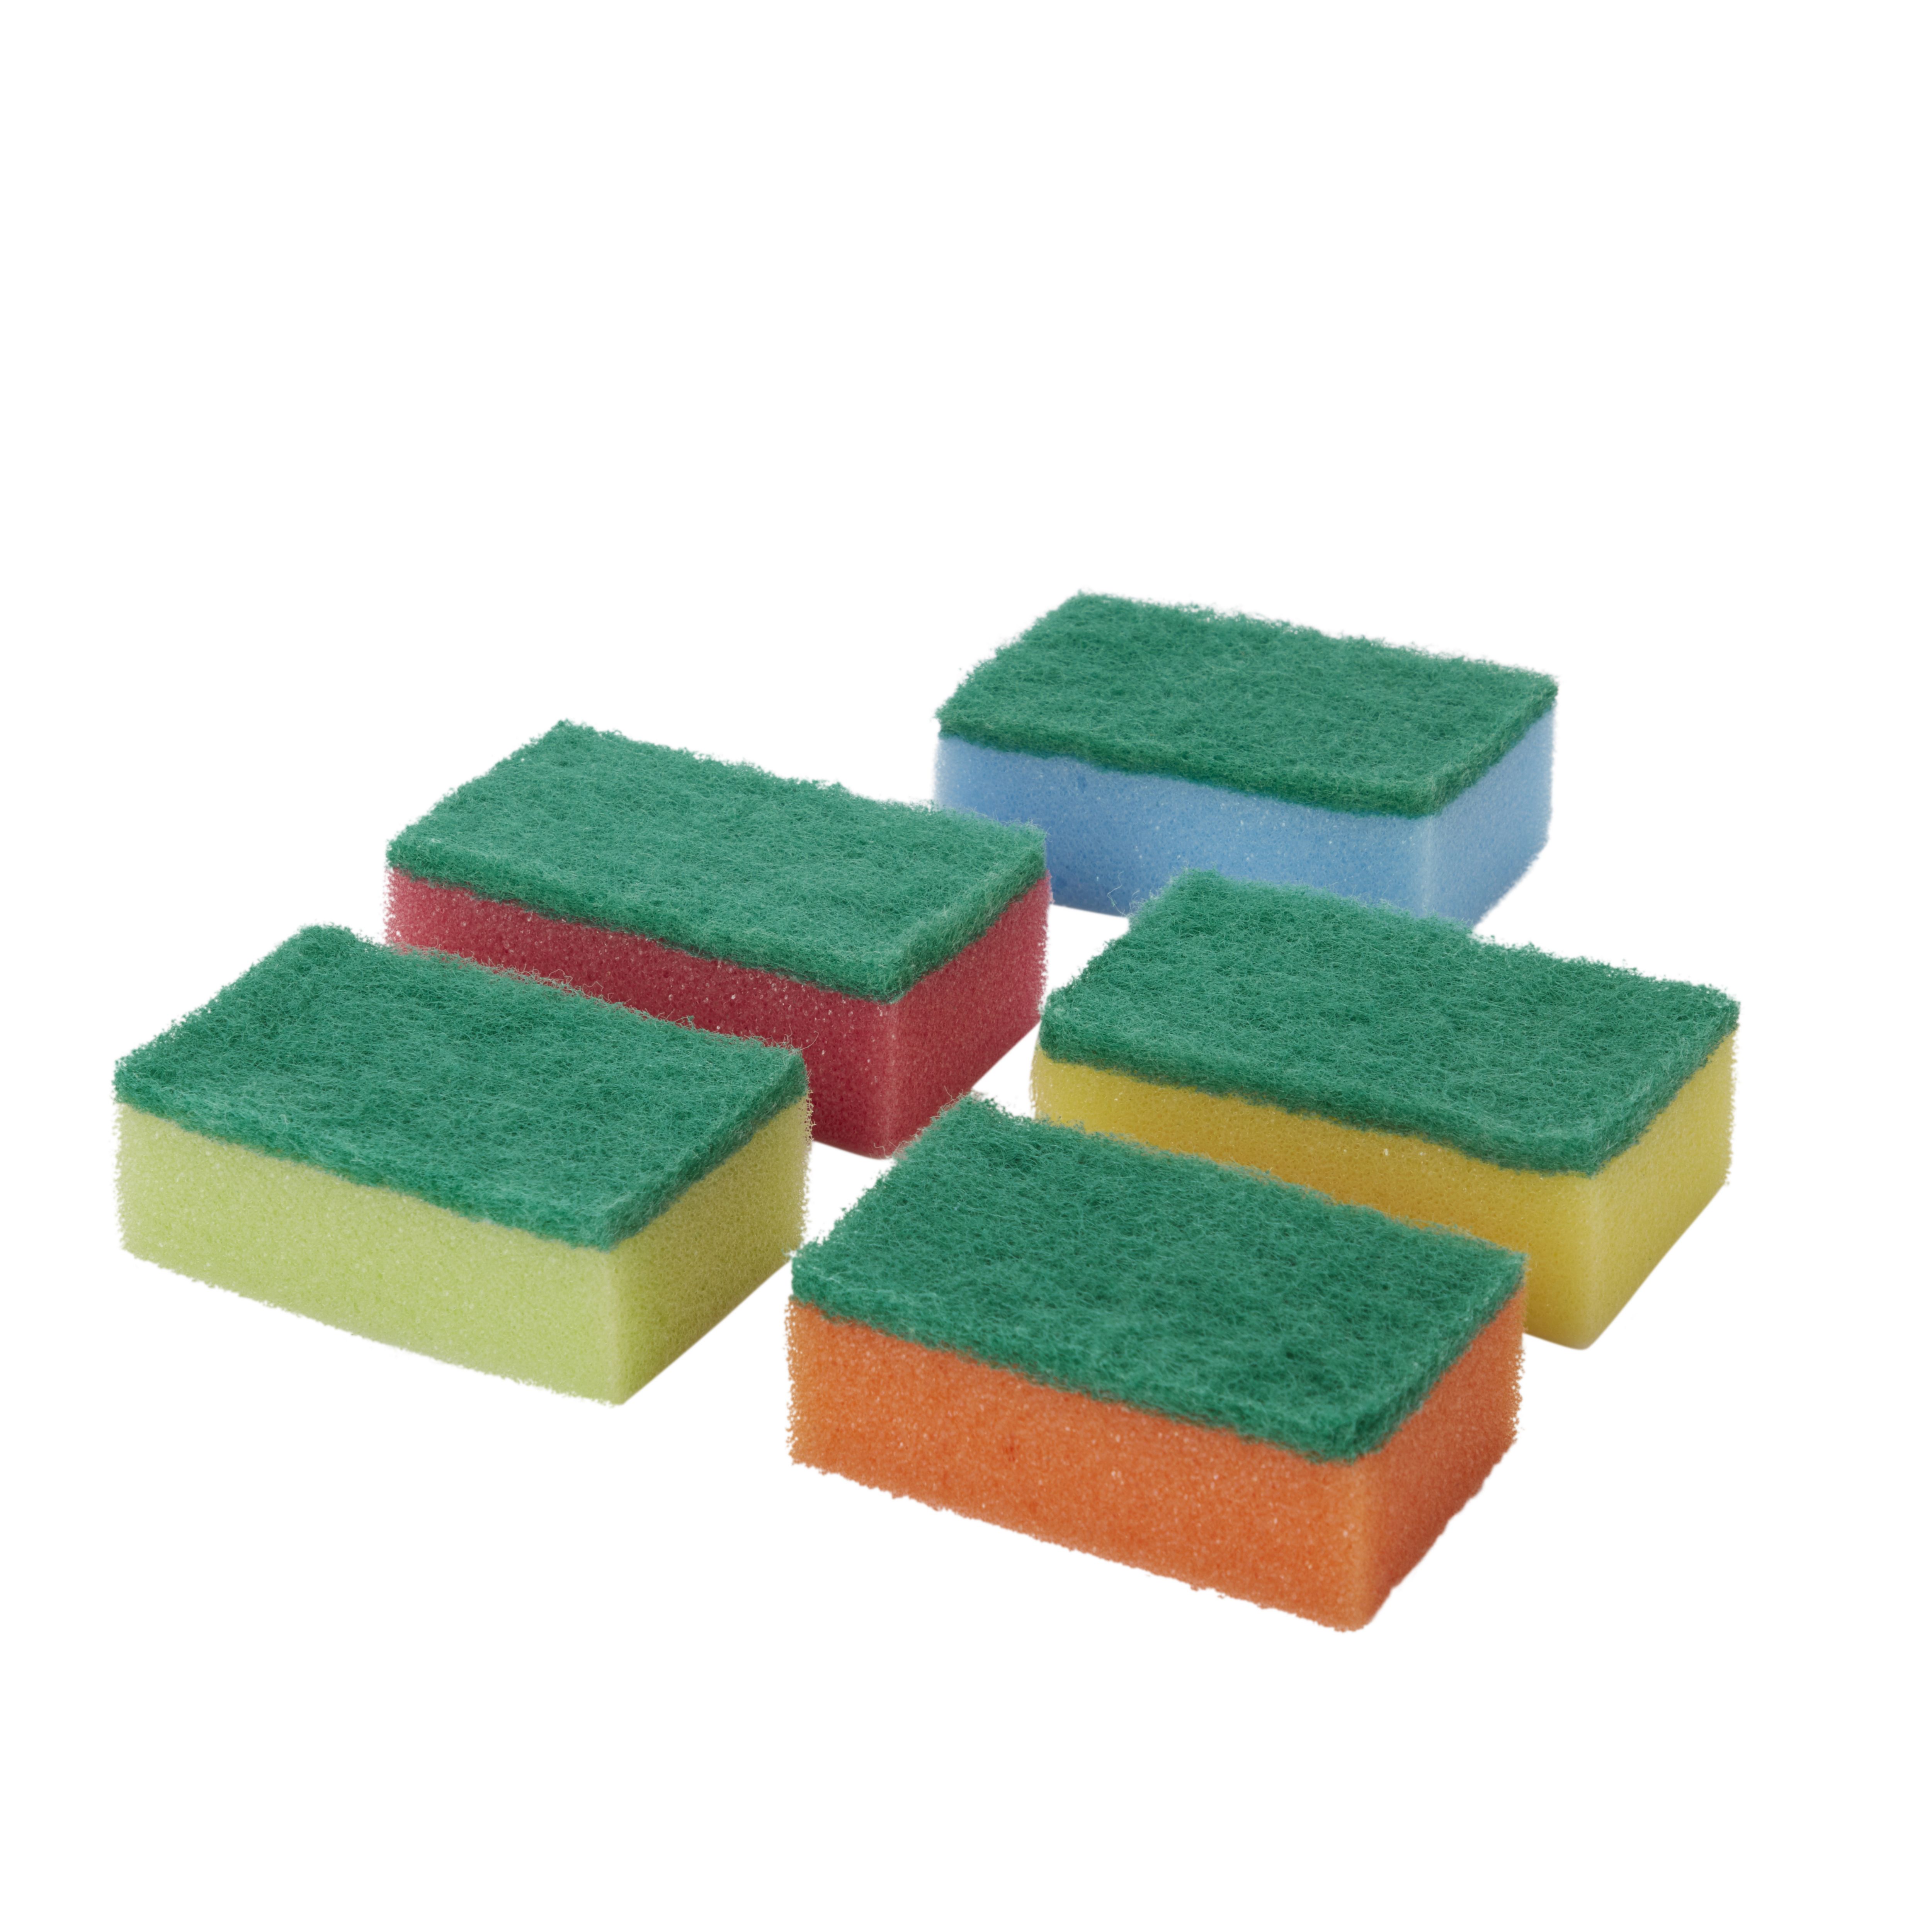 Synthetic sponge scourer, Pack of 20